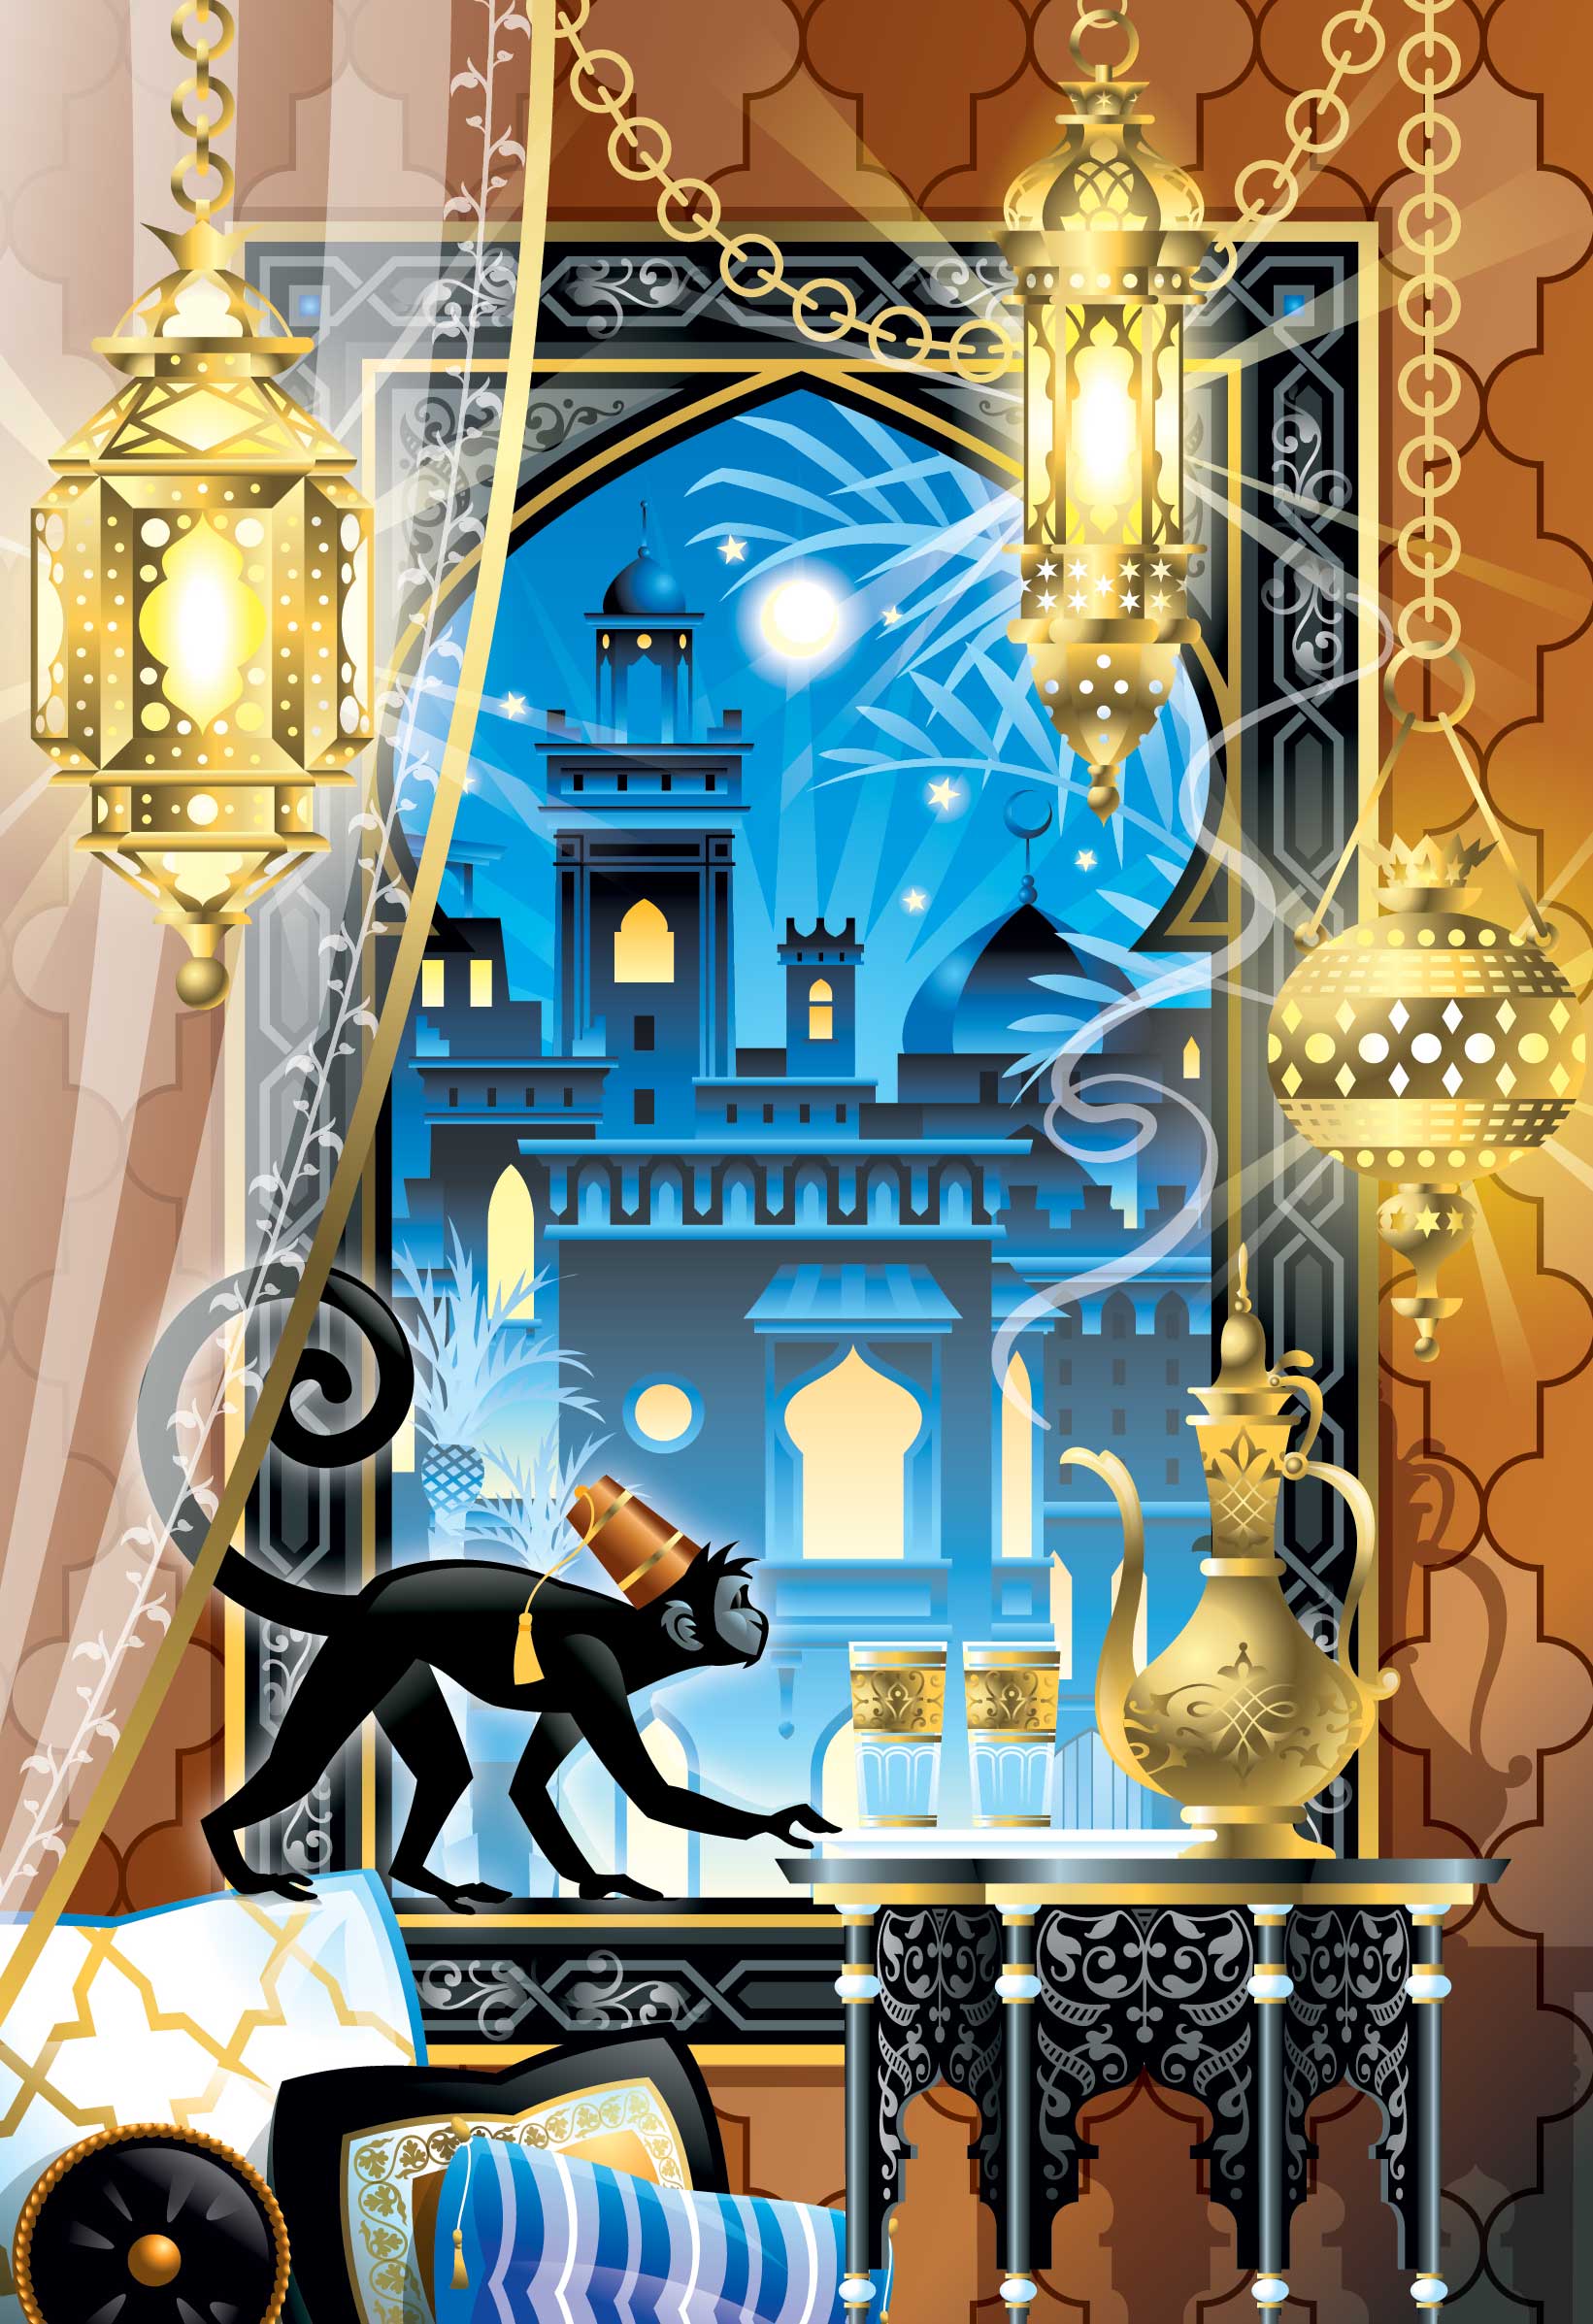 Chris Musselman Illustration Moroccan Window with monkey